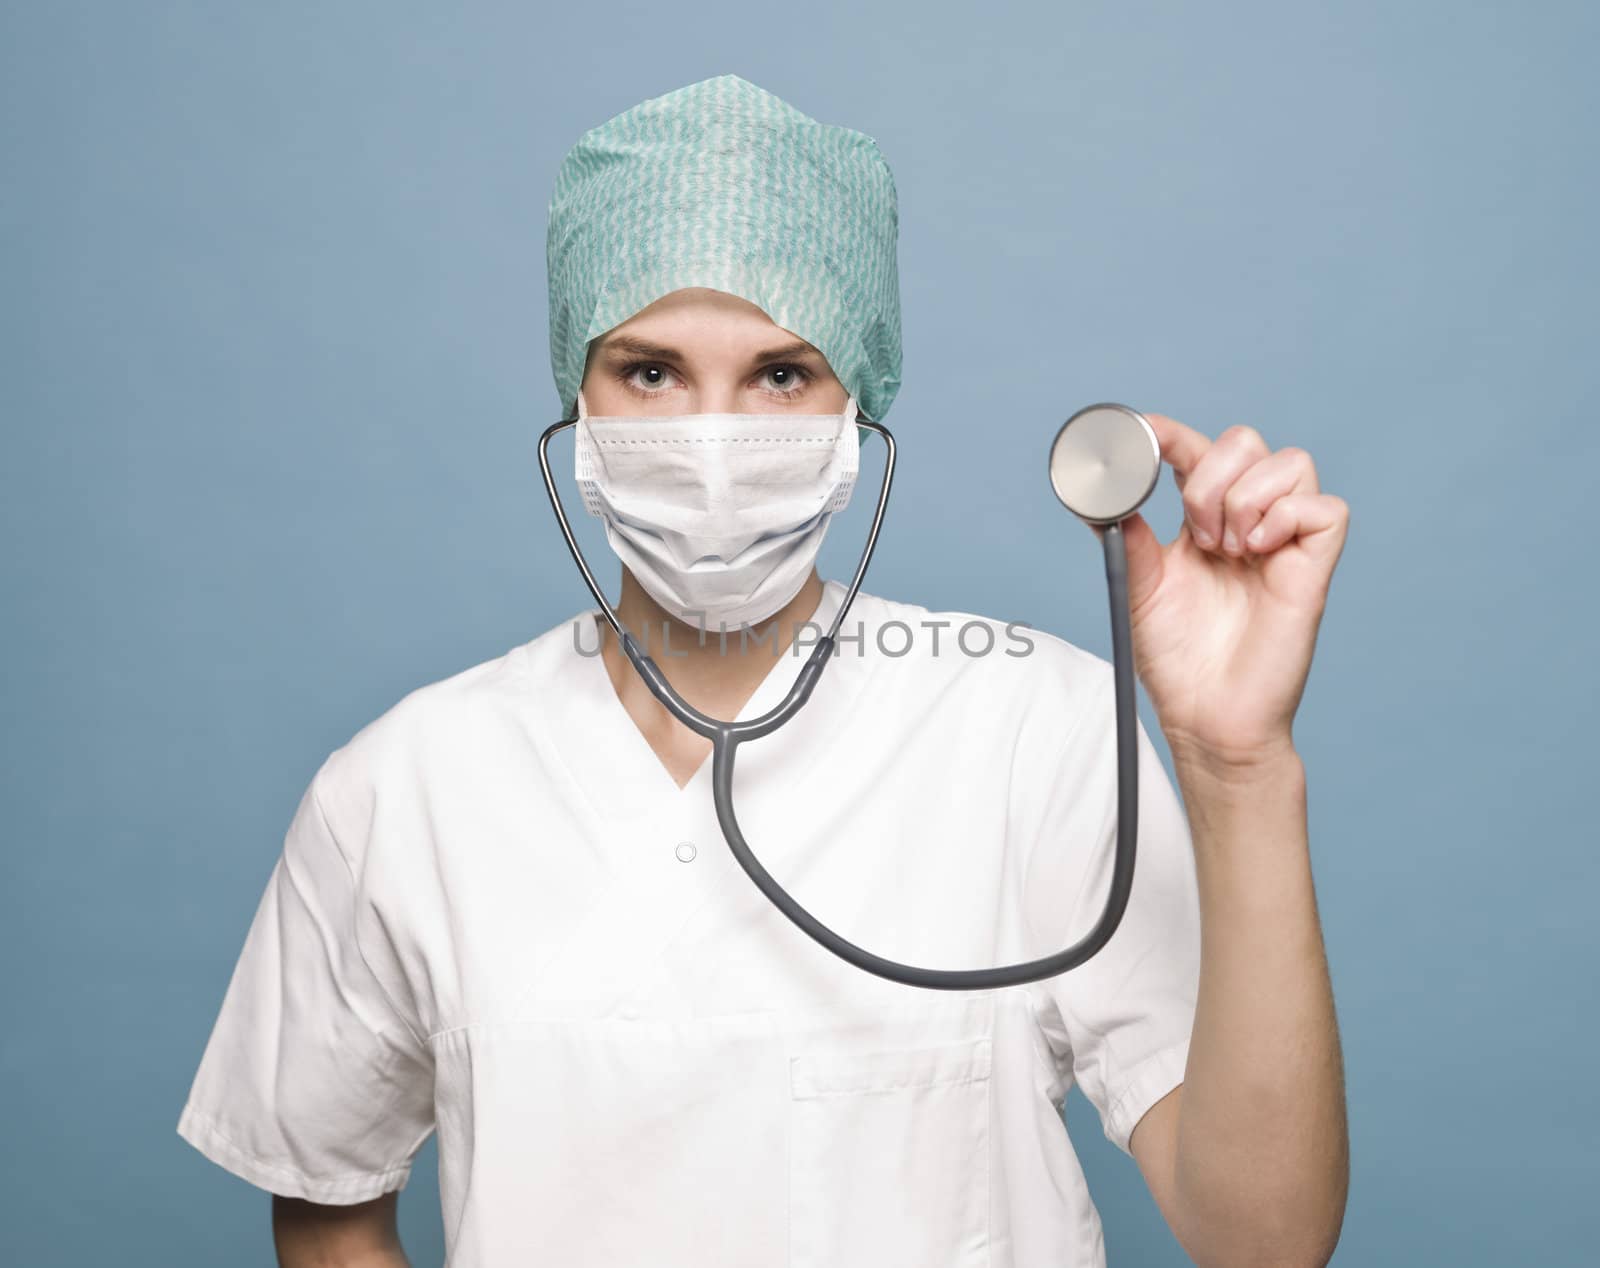 Nurse with a stethoscope by gemenacom